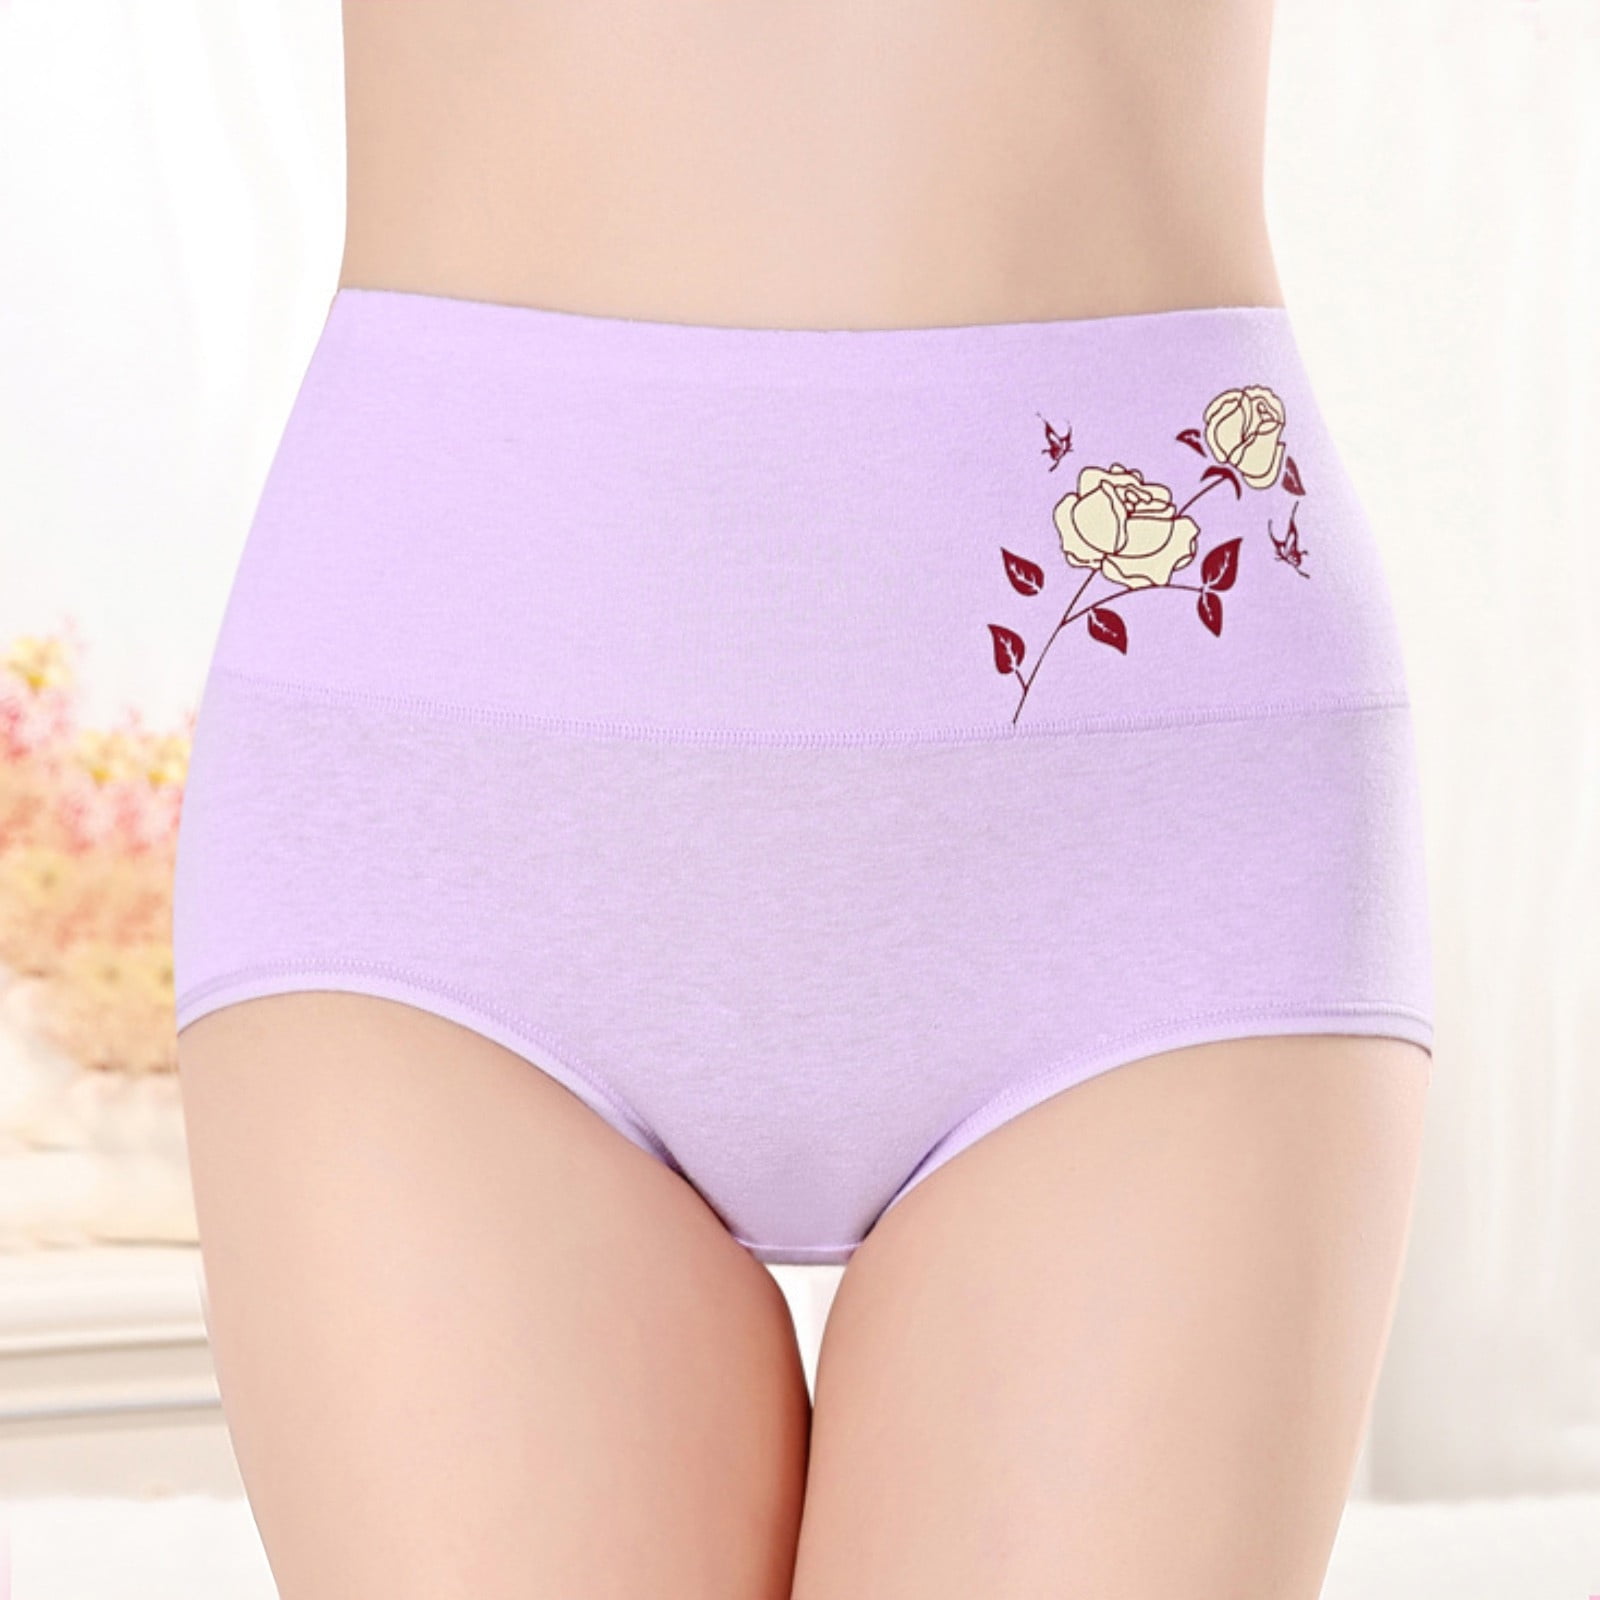 B91xZ Lingerie For Women Comfortable Printing Underwear Elastic Womens Cotton Fashion Open Cup Lingerie Purple,XL pic